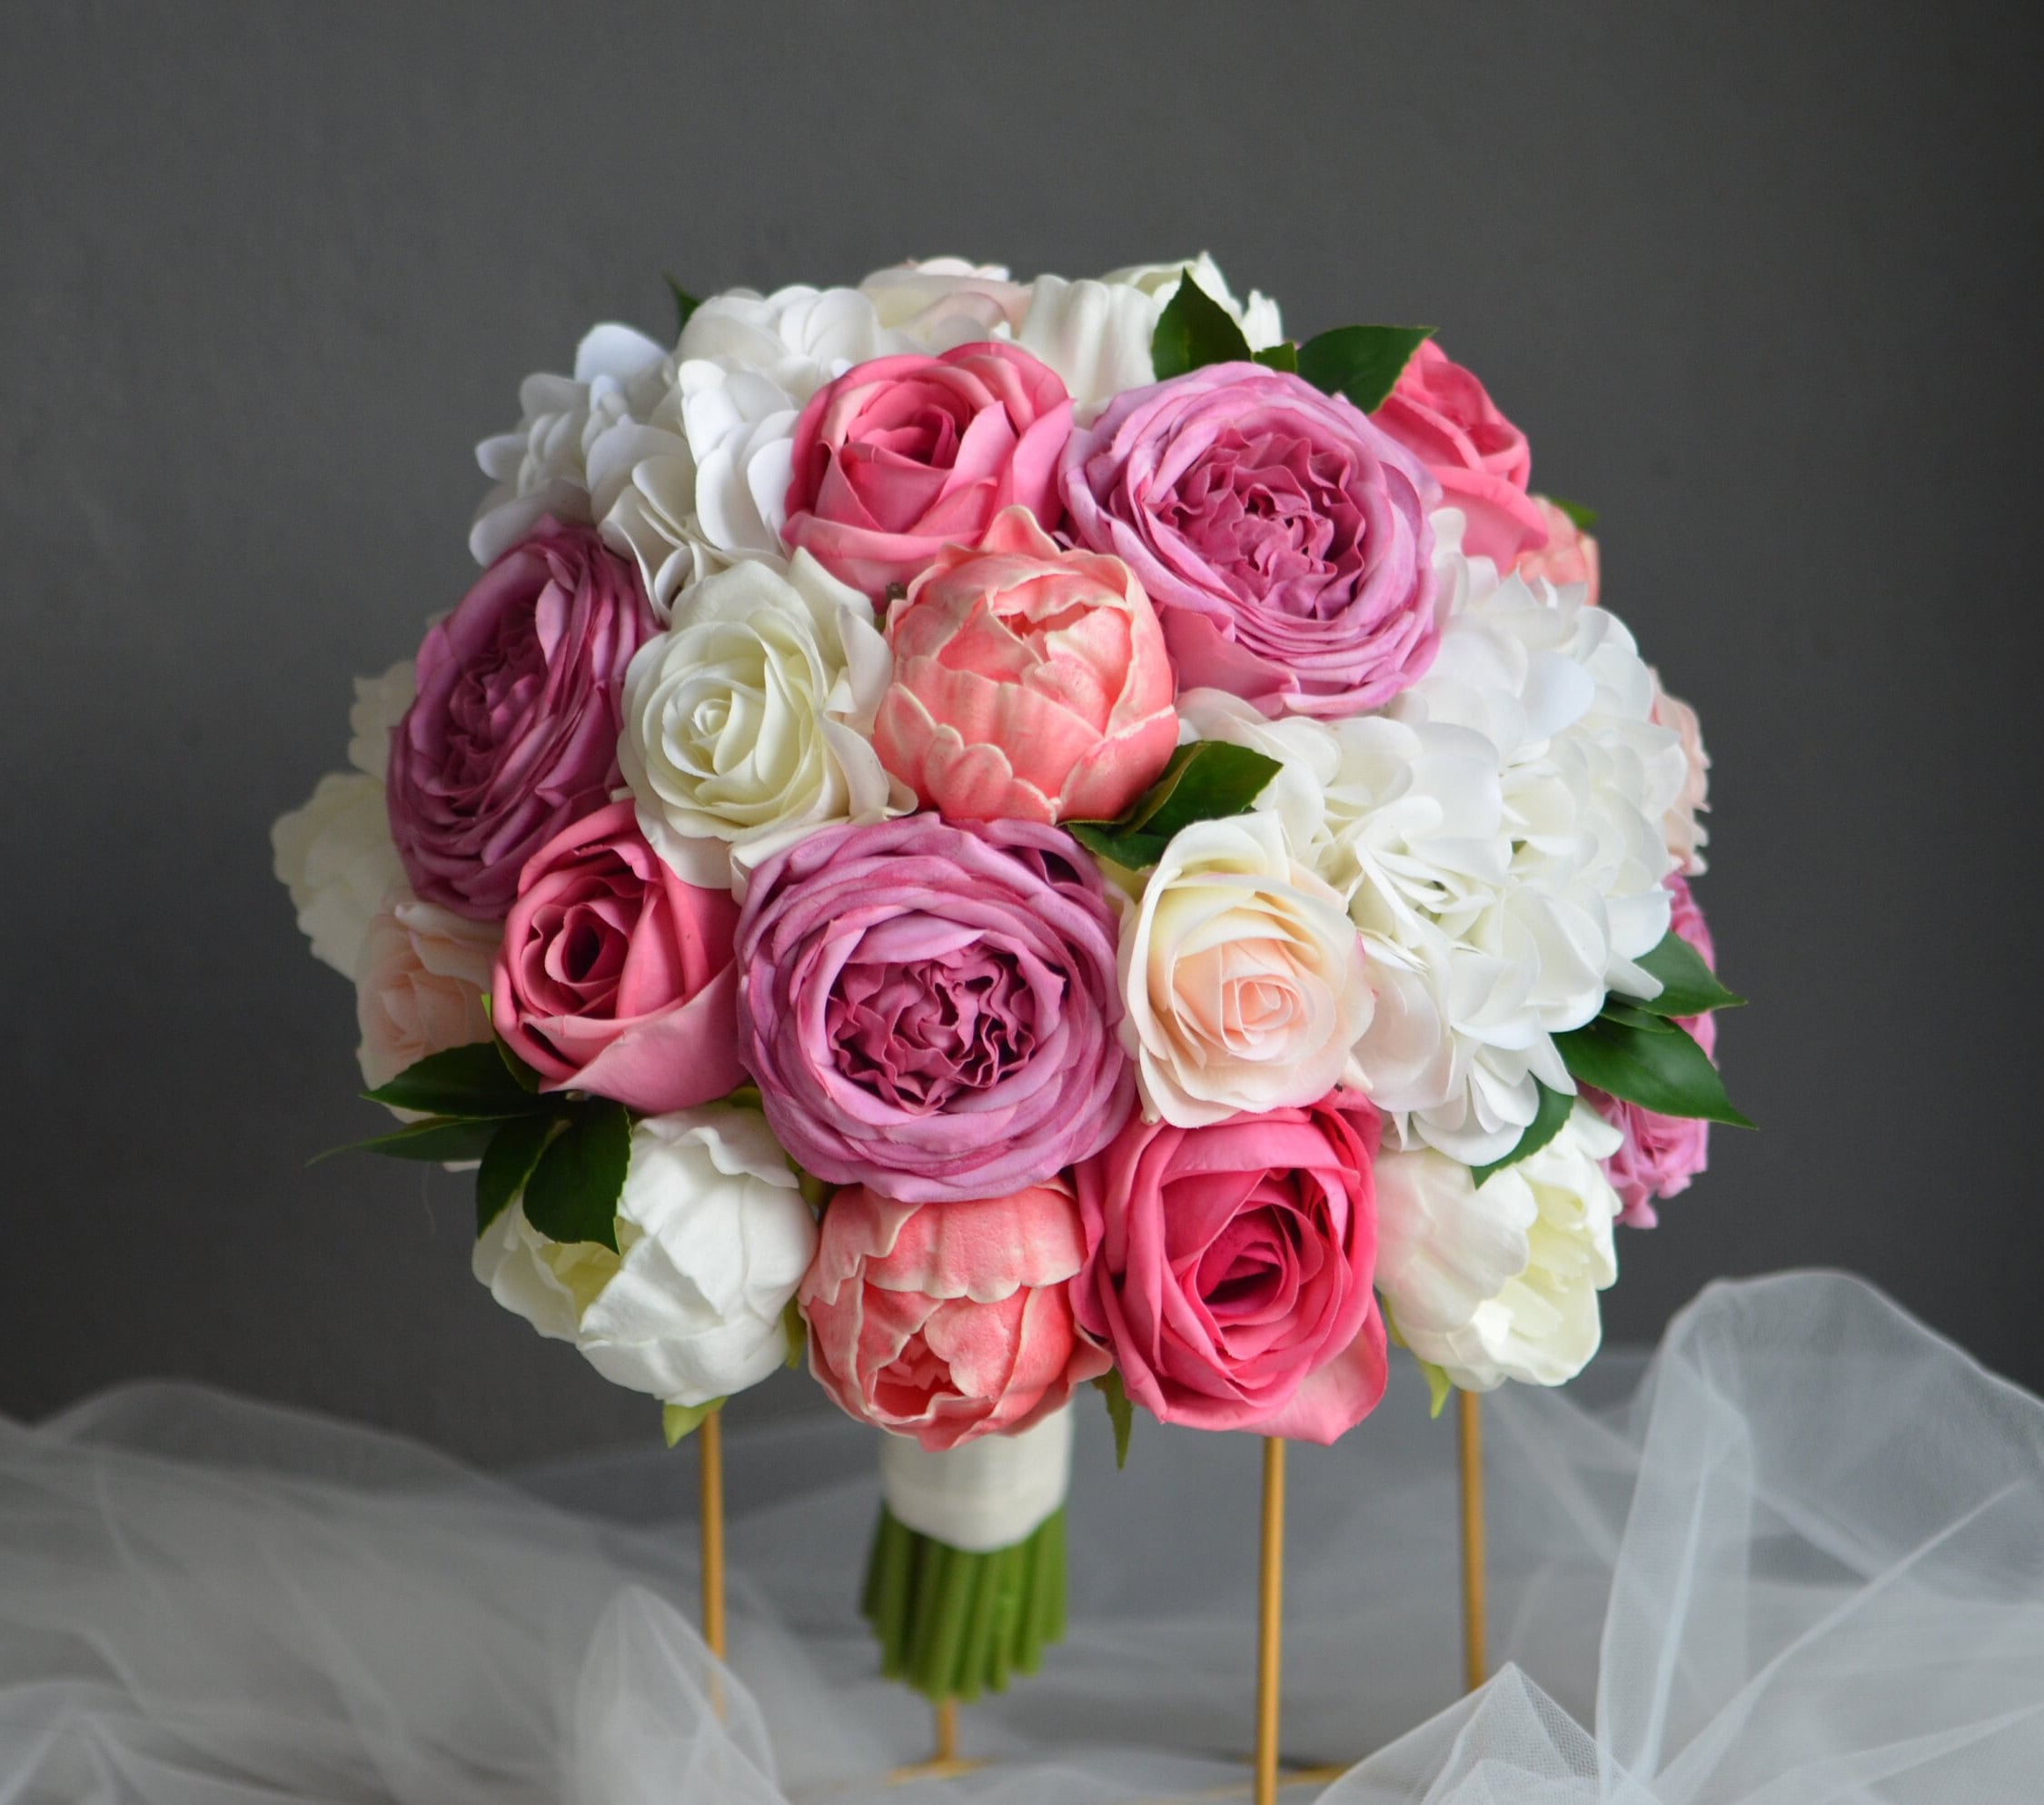 Bouquet White Hydrangeas Wedding With Hot Pink Butterflies Other